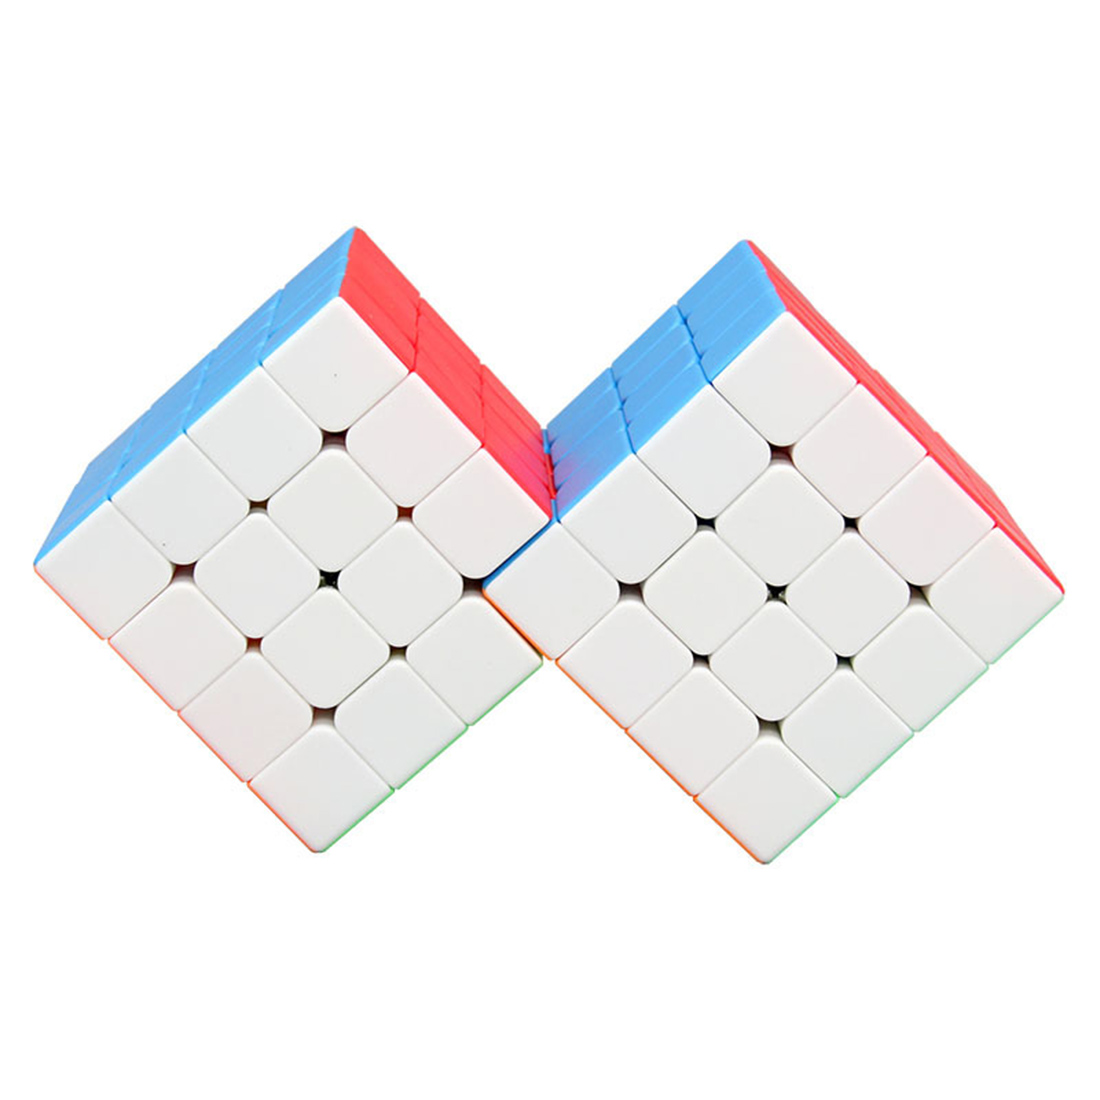 WitEden 4x4 Double Magic Cube